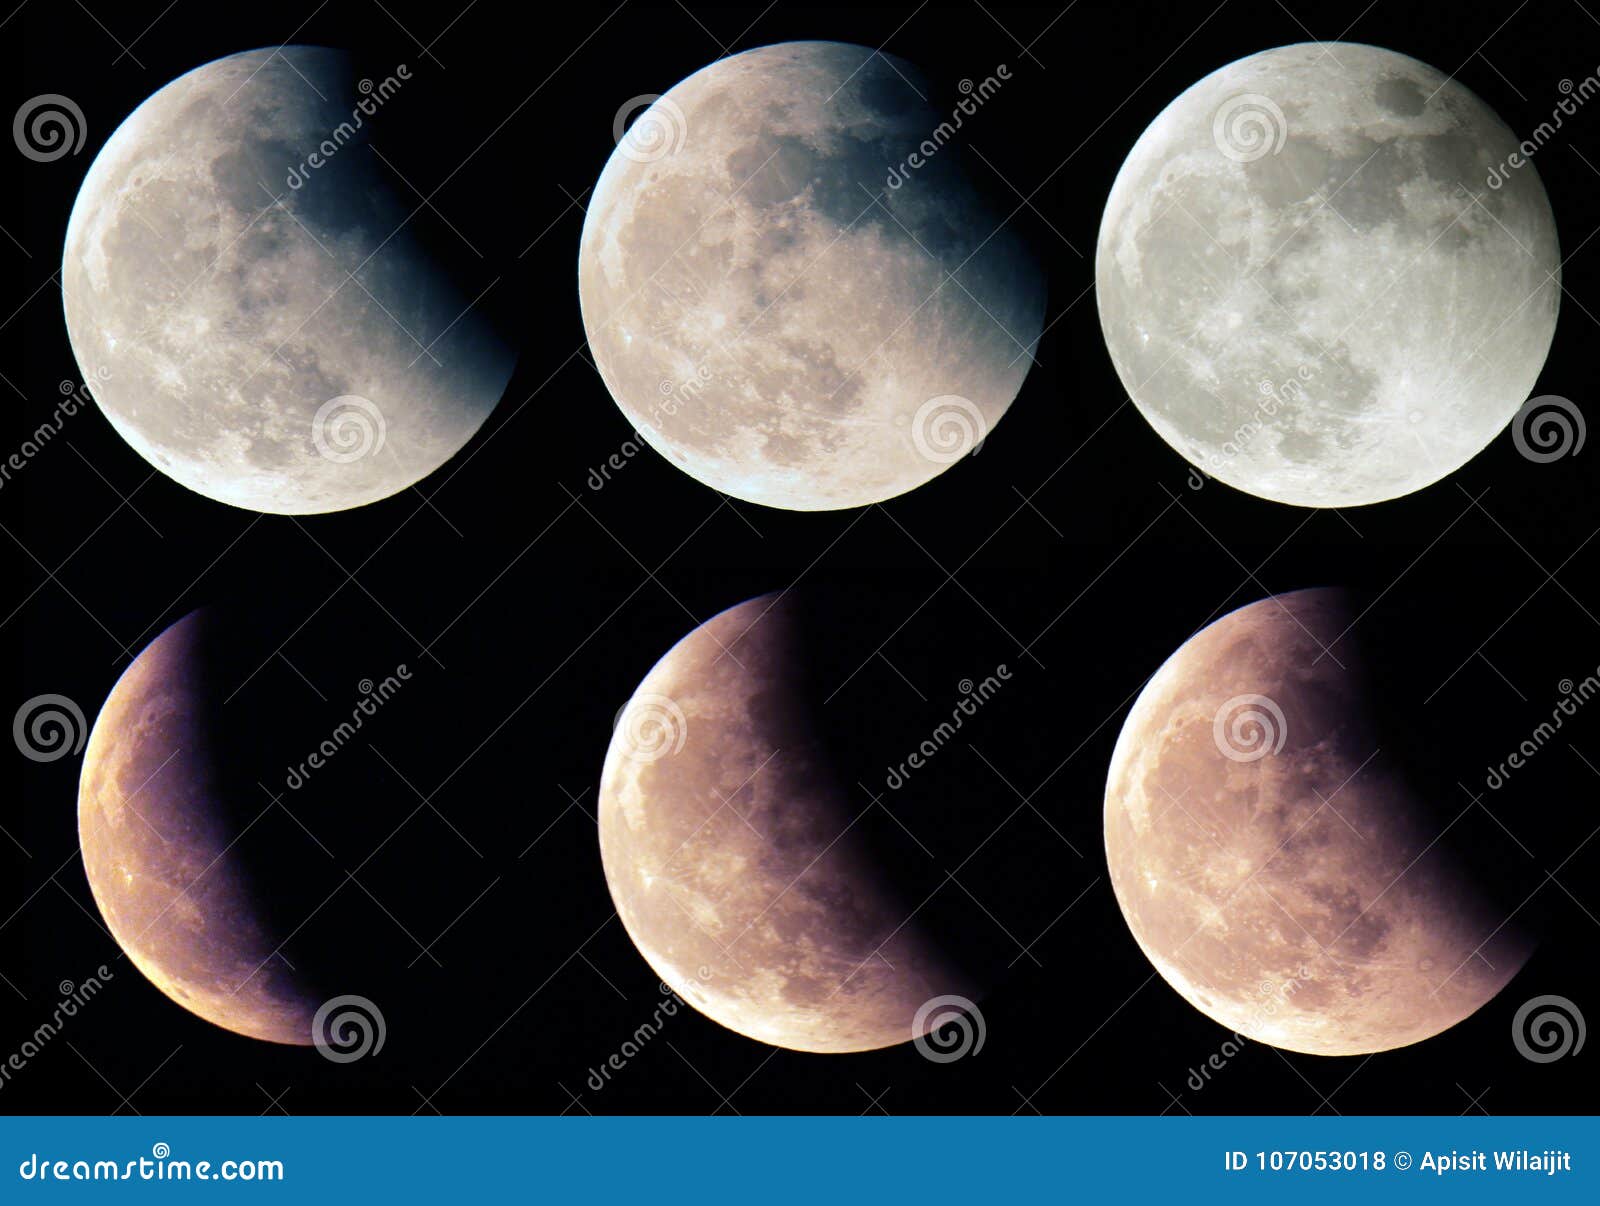 lunar eclipse stages.